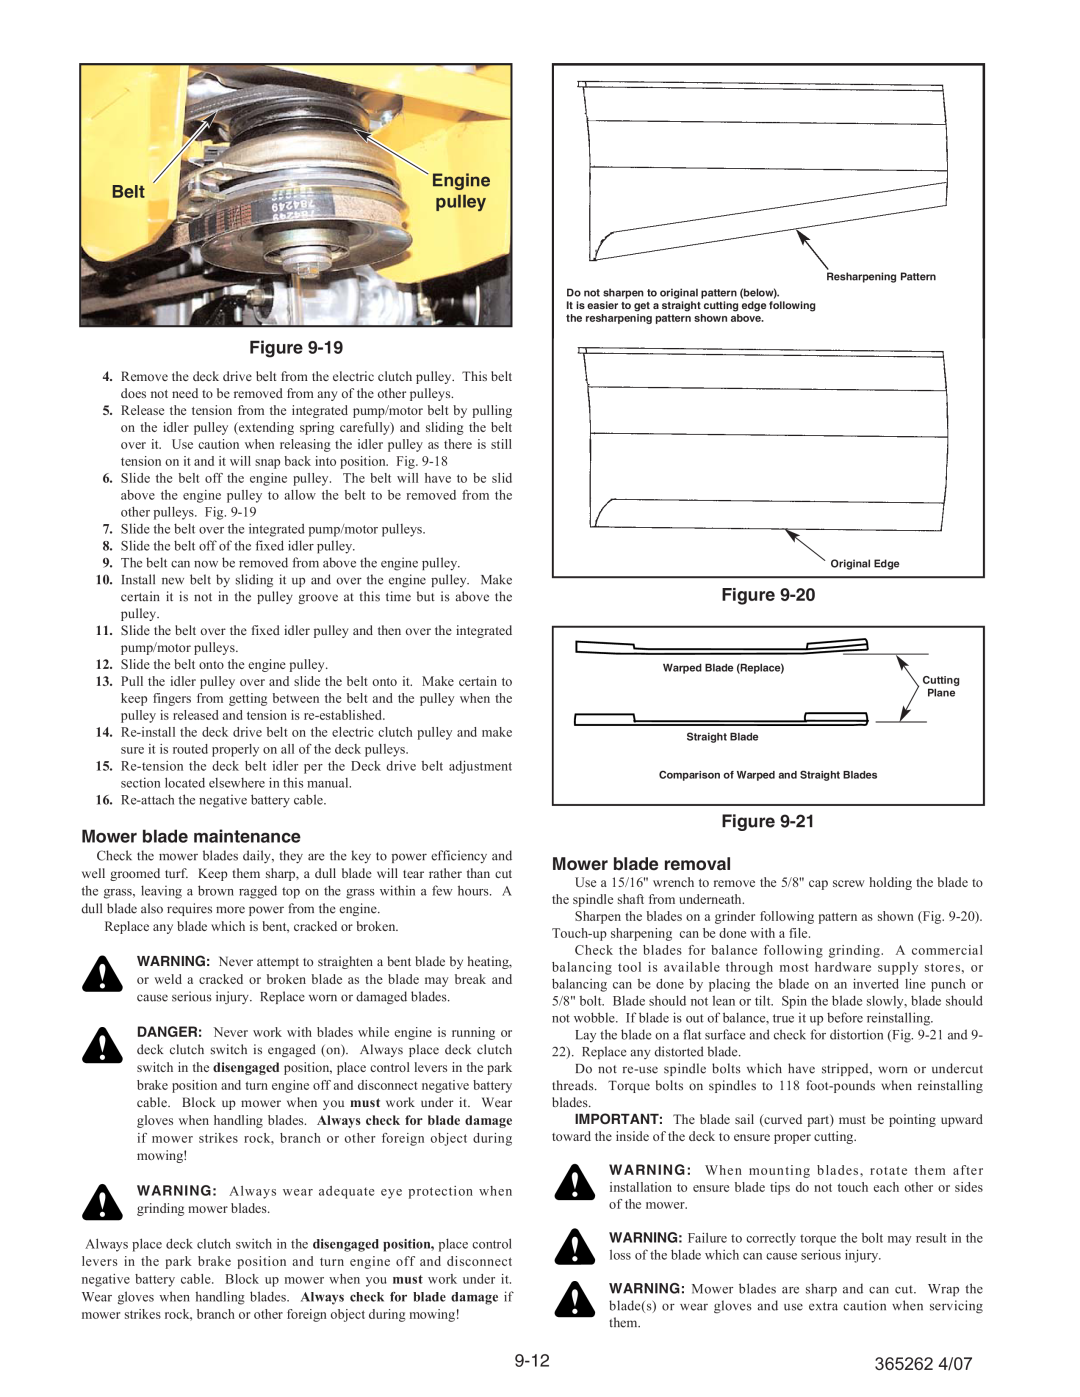 Hustler Turf Lawn Mower manual Engine Belt pulley, Mower blade maintenance, Mower blade removal, 9-12, 365262 4/07 